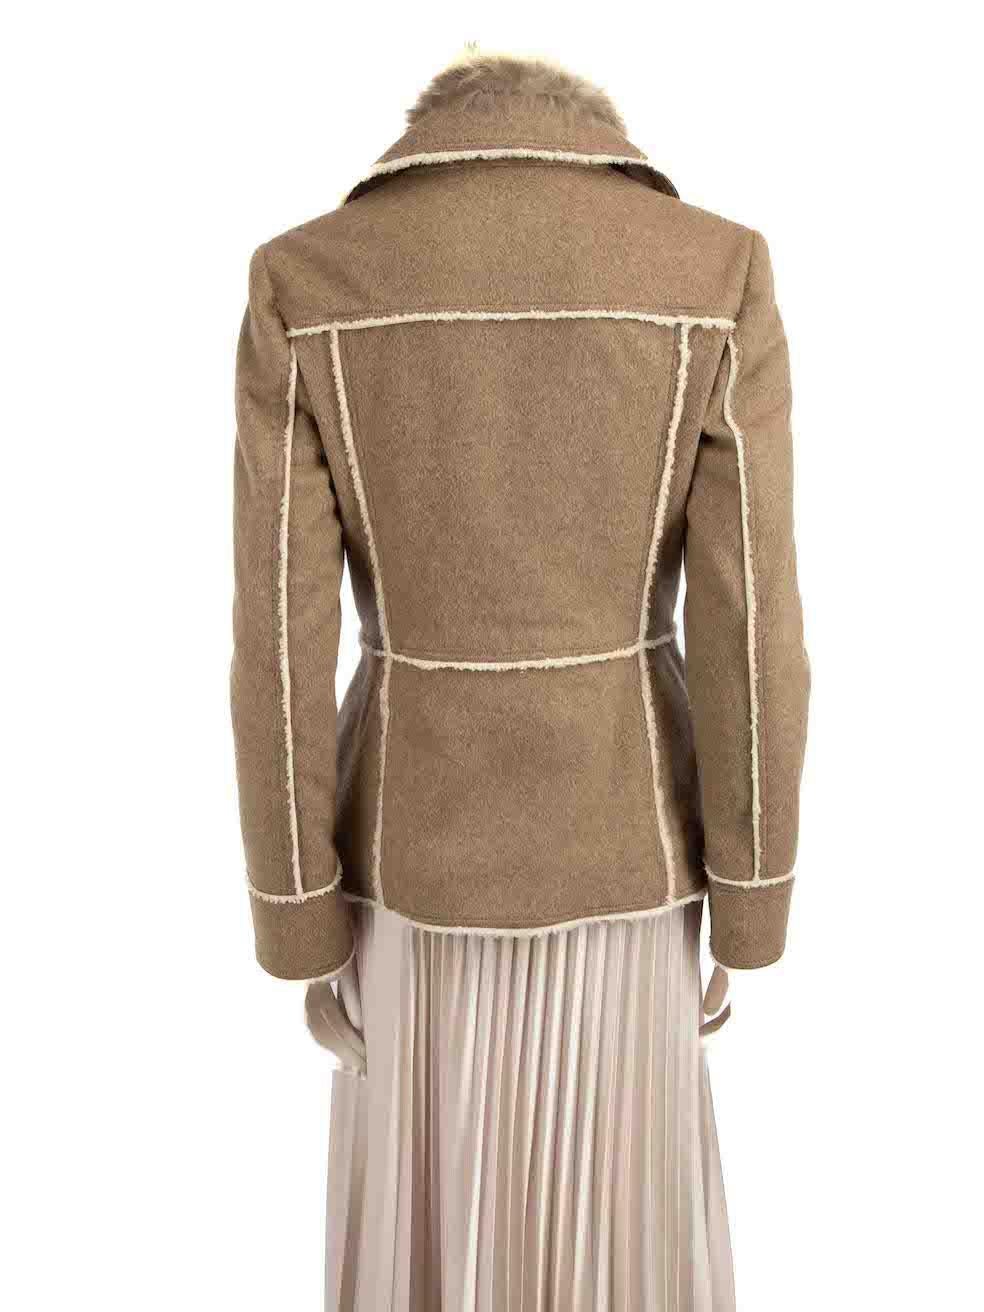 Prada Prada Sport Beige Wool Double-Breasted Fur Trim Coat Size M In Good Condition For Sale In London, GB